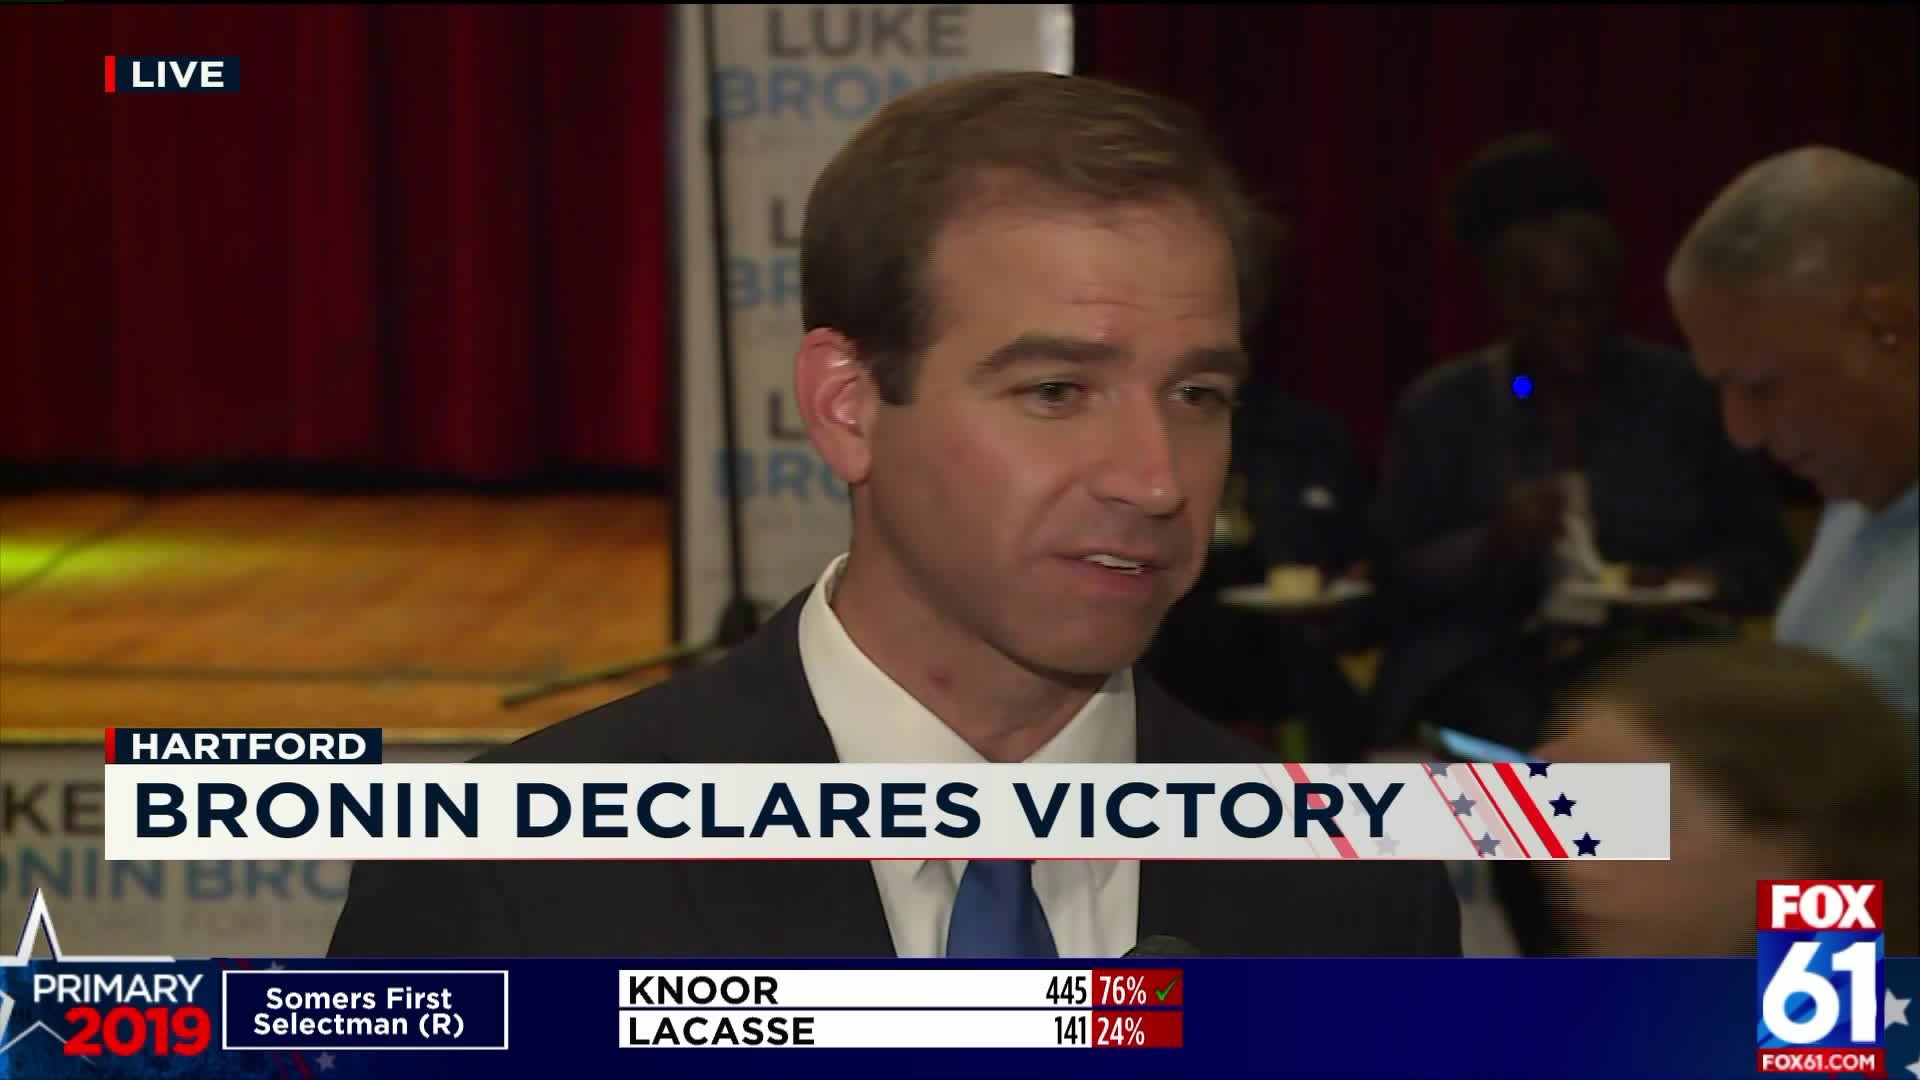 Mayor Luke Bronin declares victory in 2019 Democratic Primary